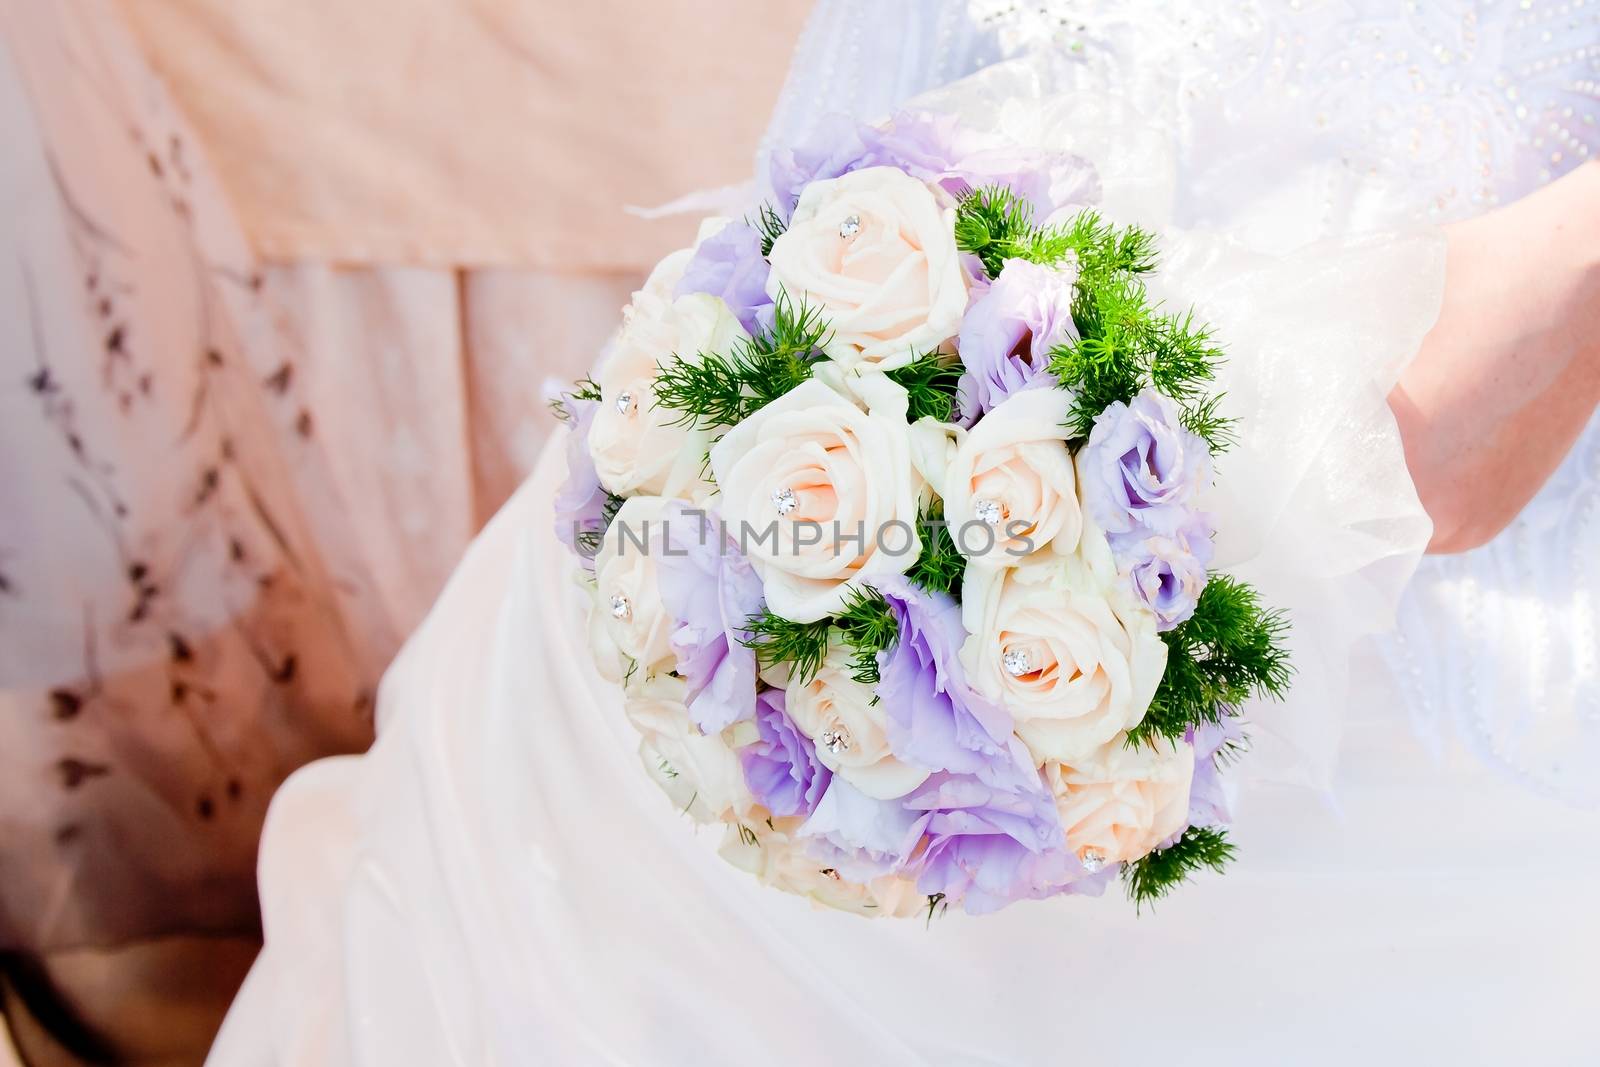 detail of wedding bouquet at bride's hands